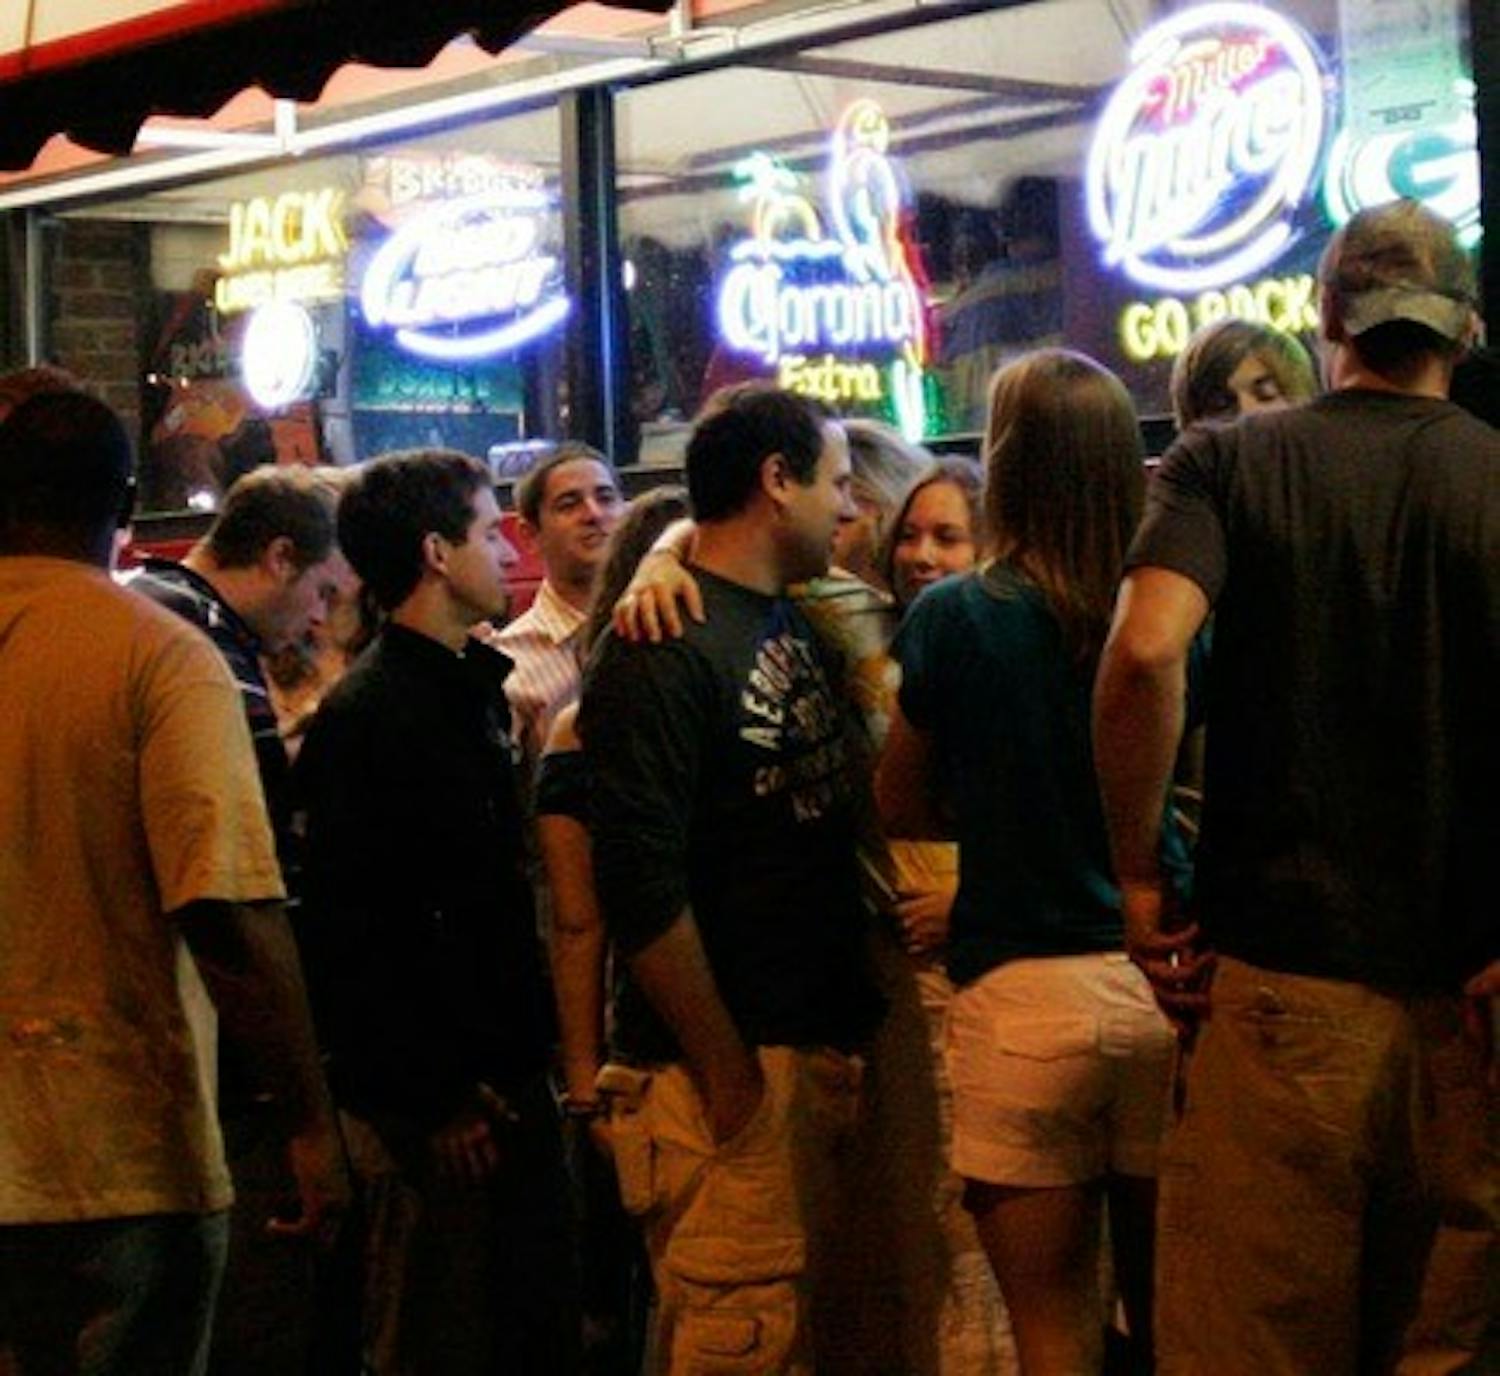 Police, bars work to stop late-night brawls